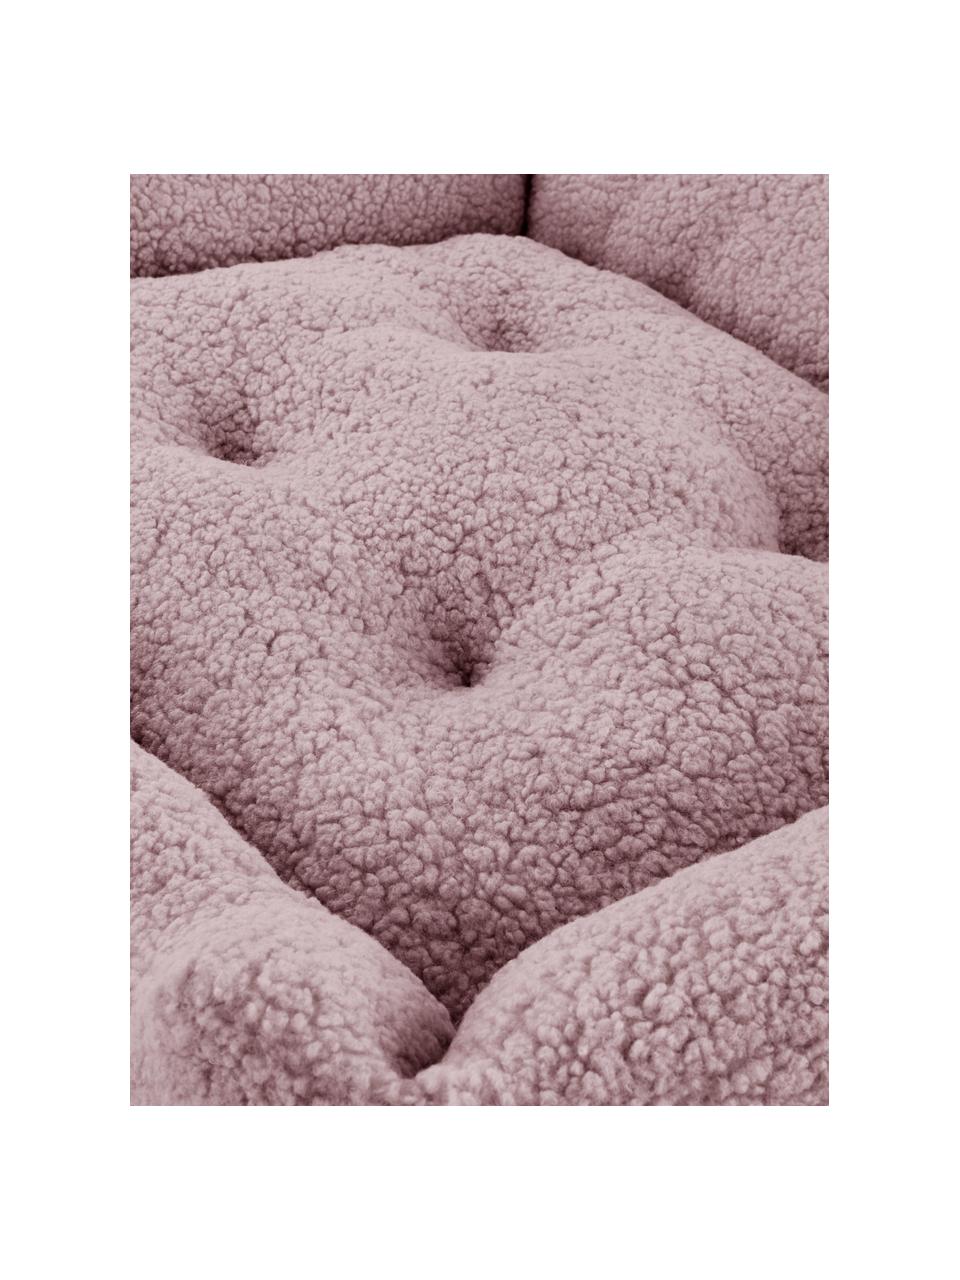 Cuccia per animali in teddy Kelsey, Rivestimento: teddy (100% poliestere), Rosa chiaro, Larg. 58 x Lung. 78 cm